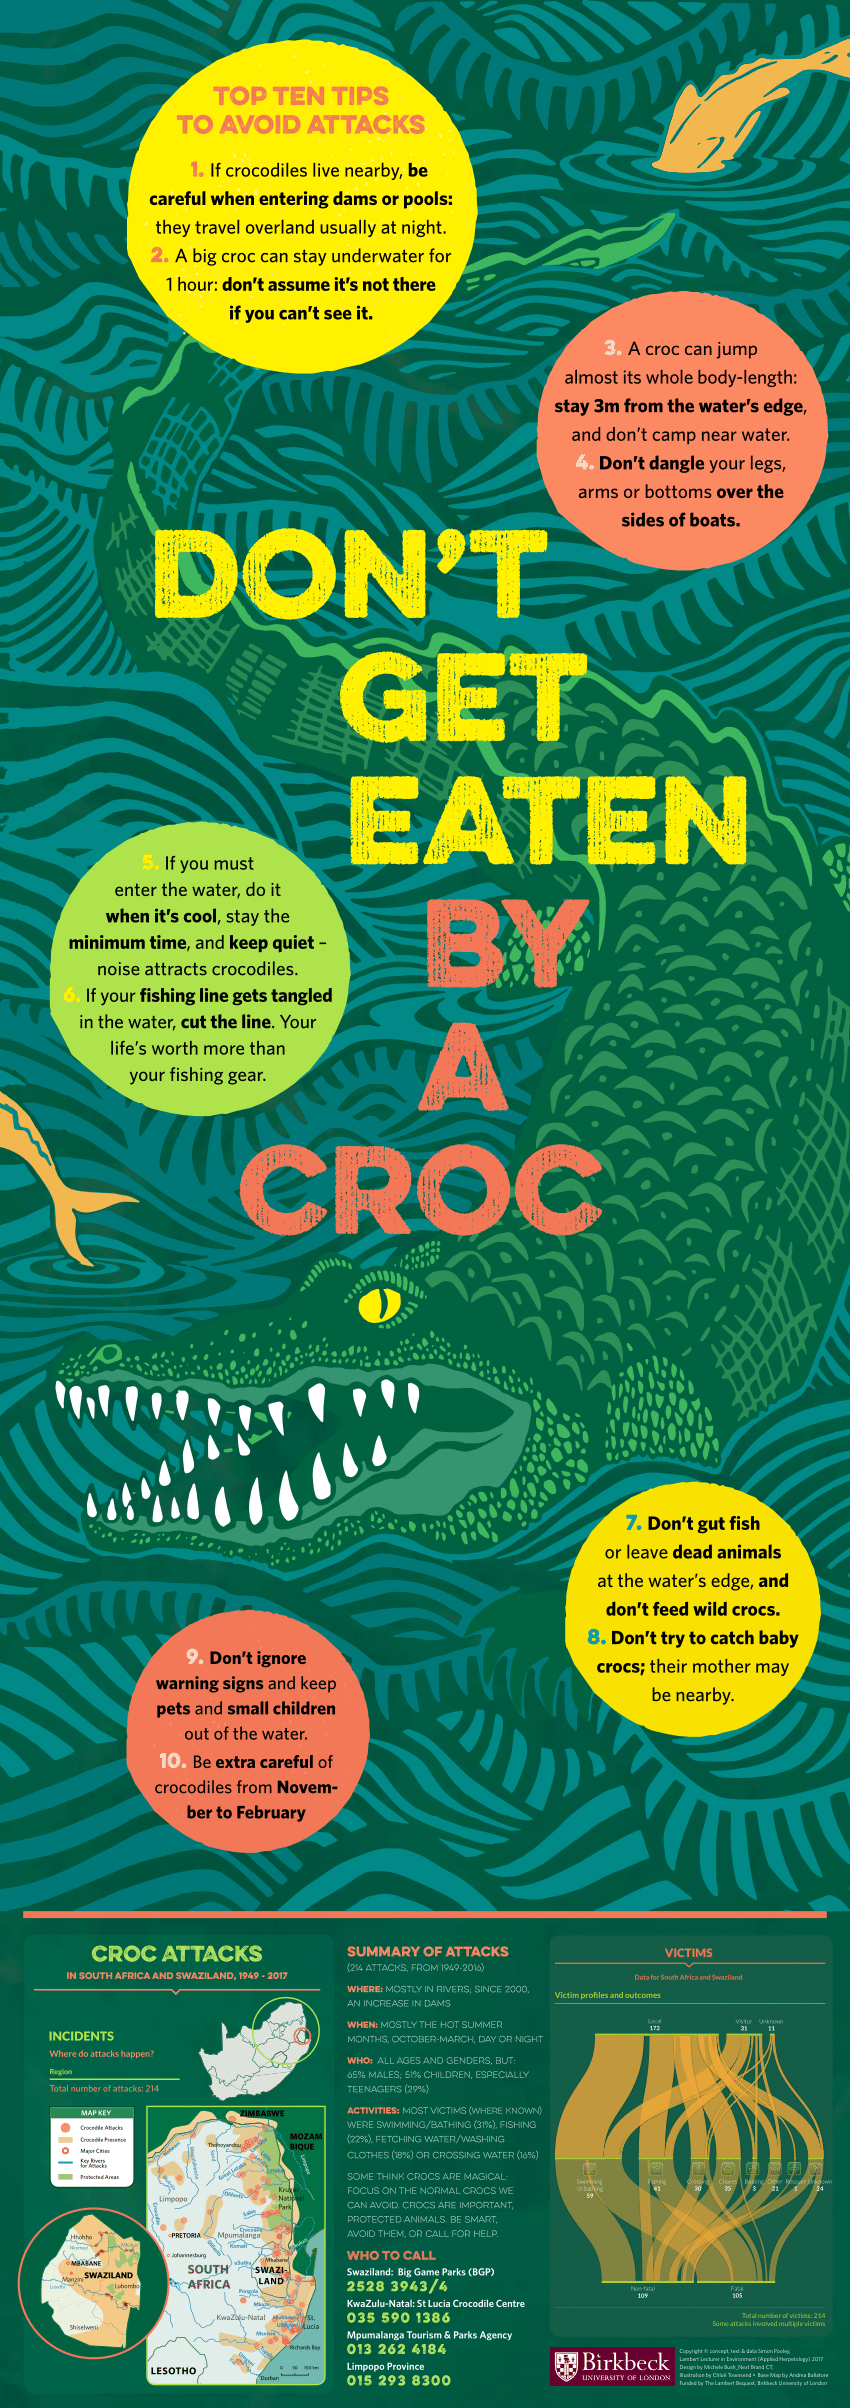 crocs nearby